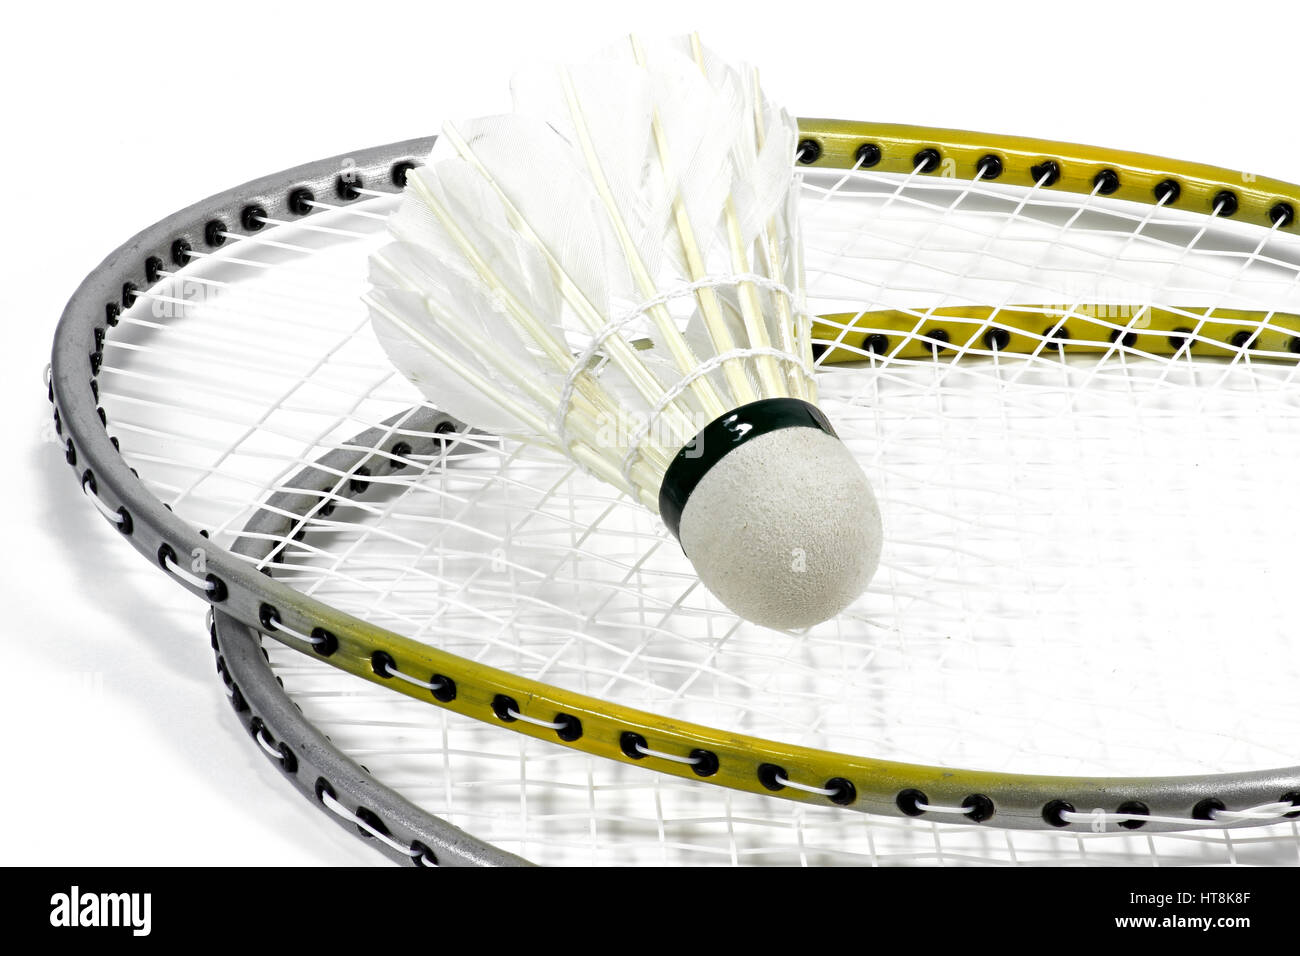 badminton equipment on white background Stock Photo